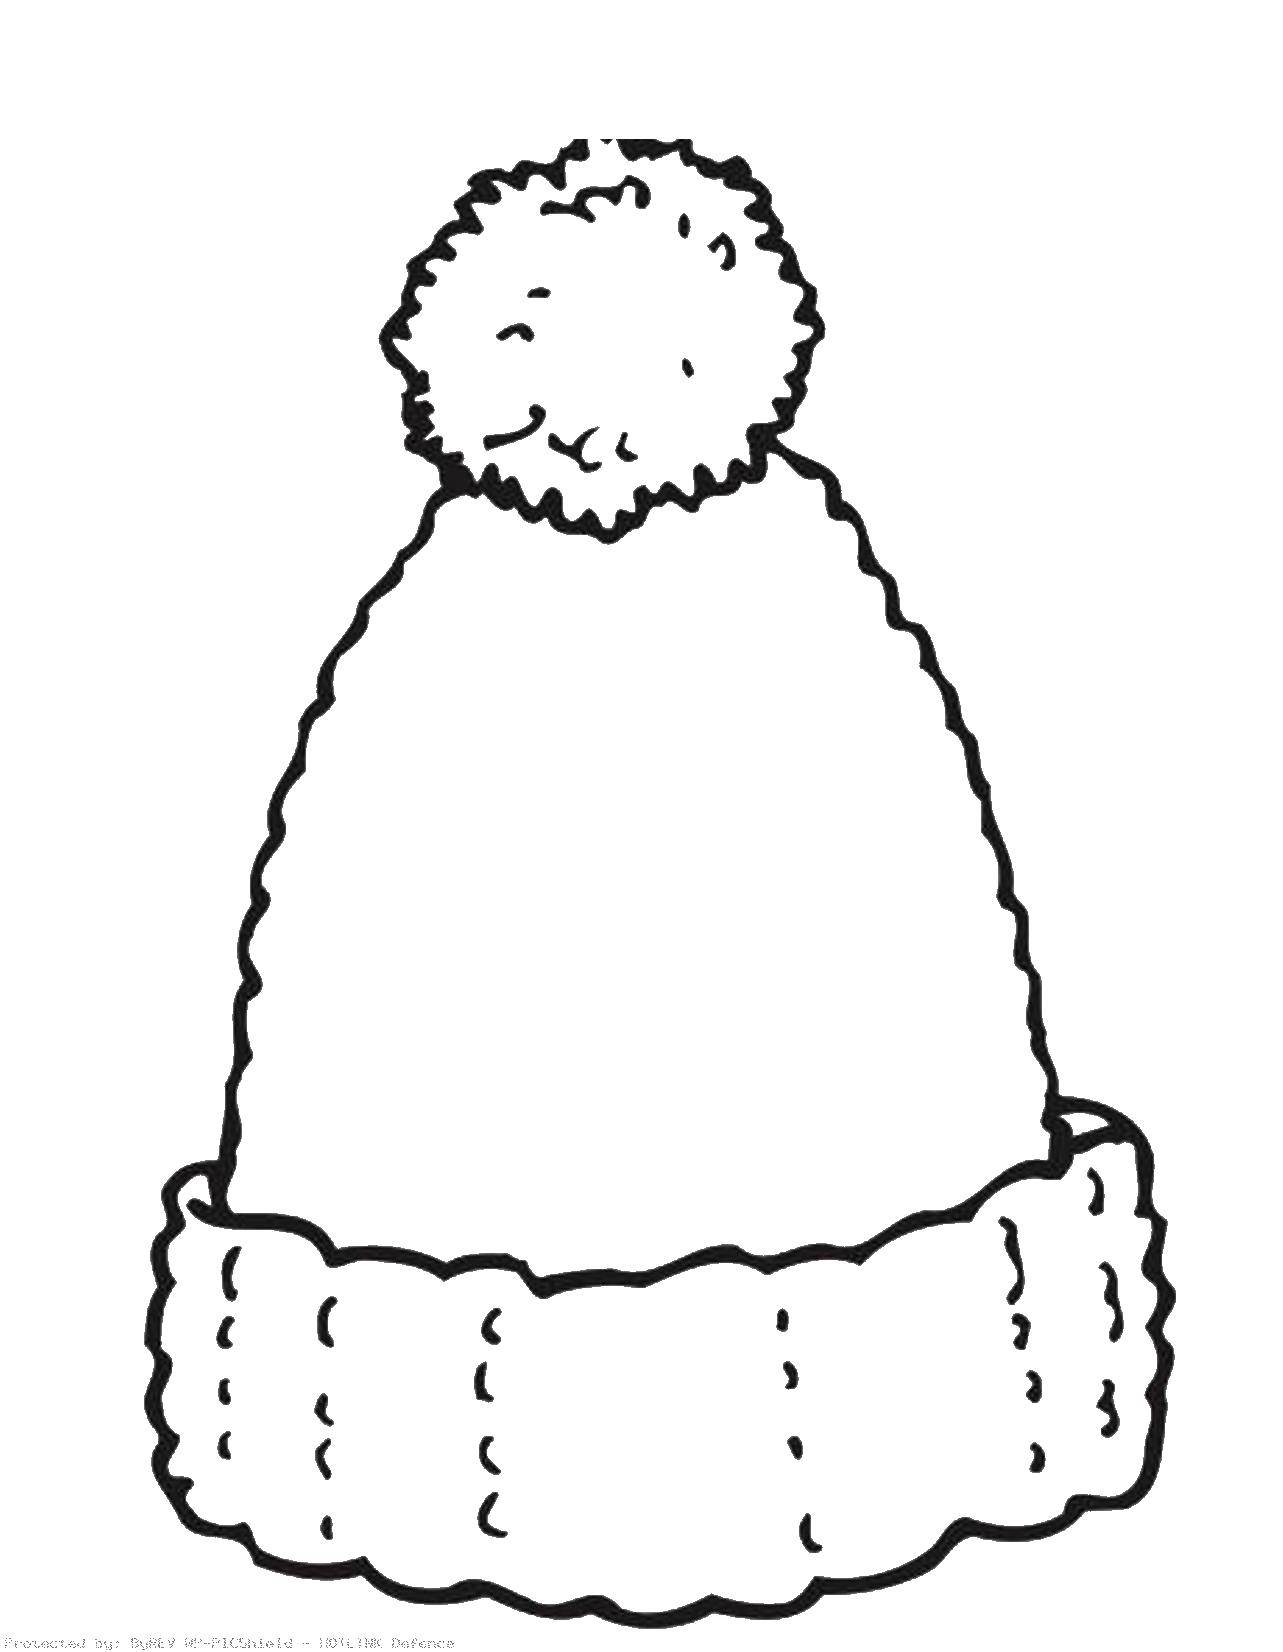 Название: Раскраска Шапка с бубенчиком. Категория: Одежда. Теги: Одежда, зима, шапка.